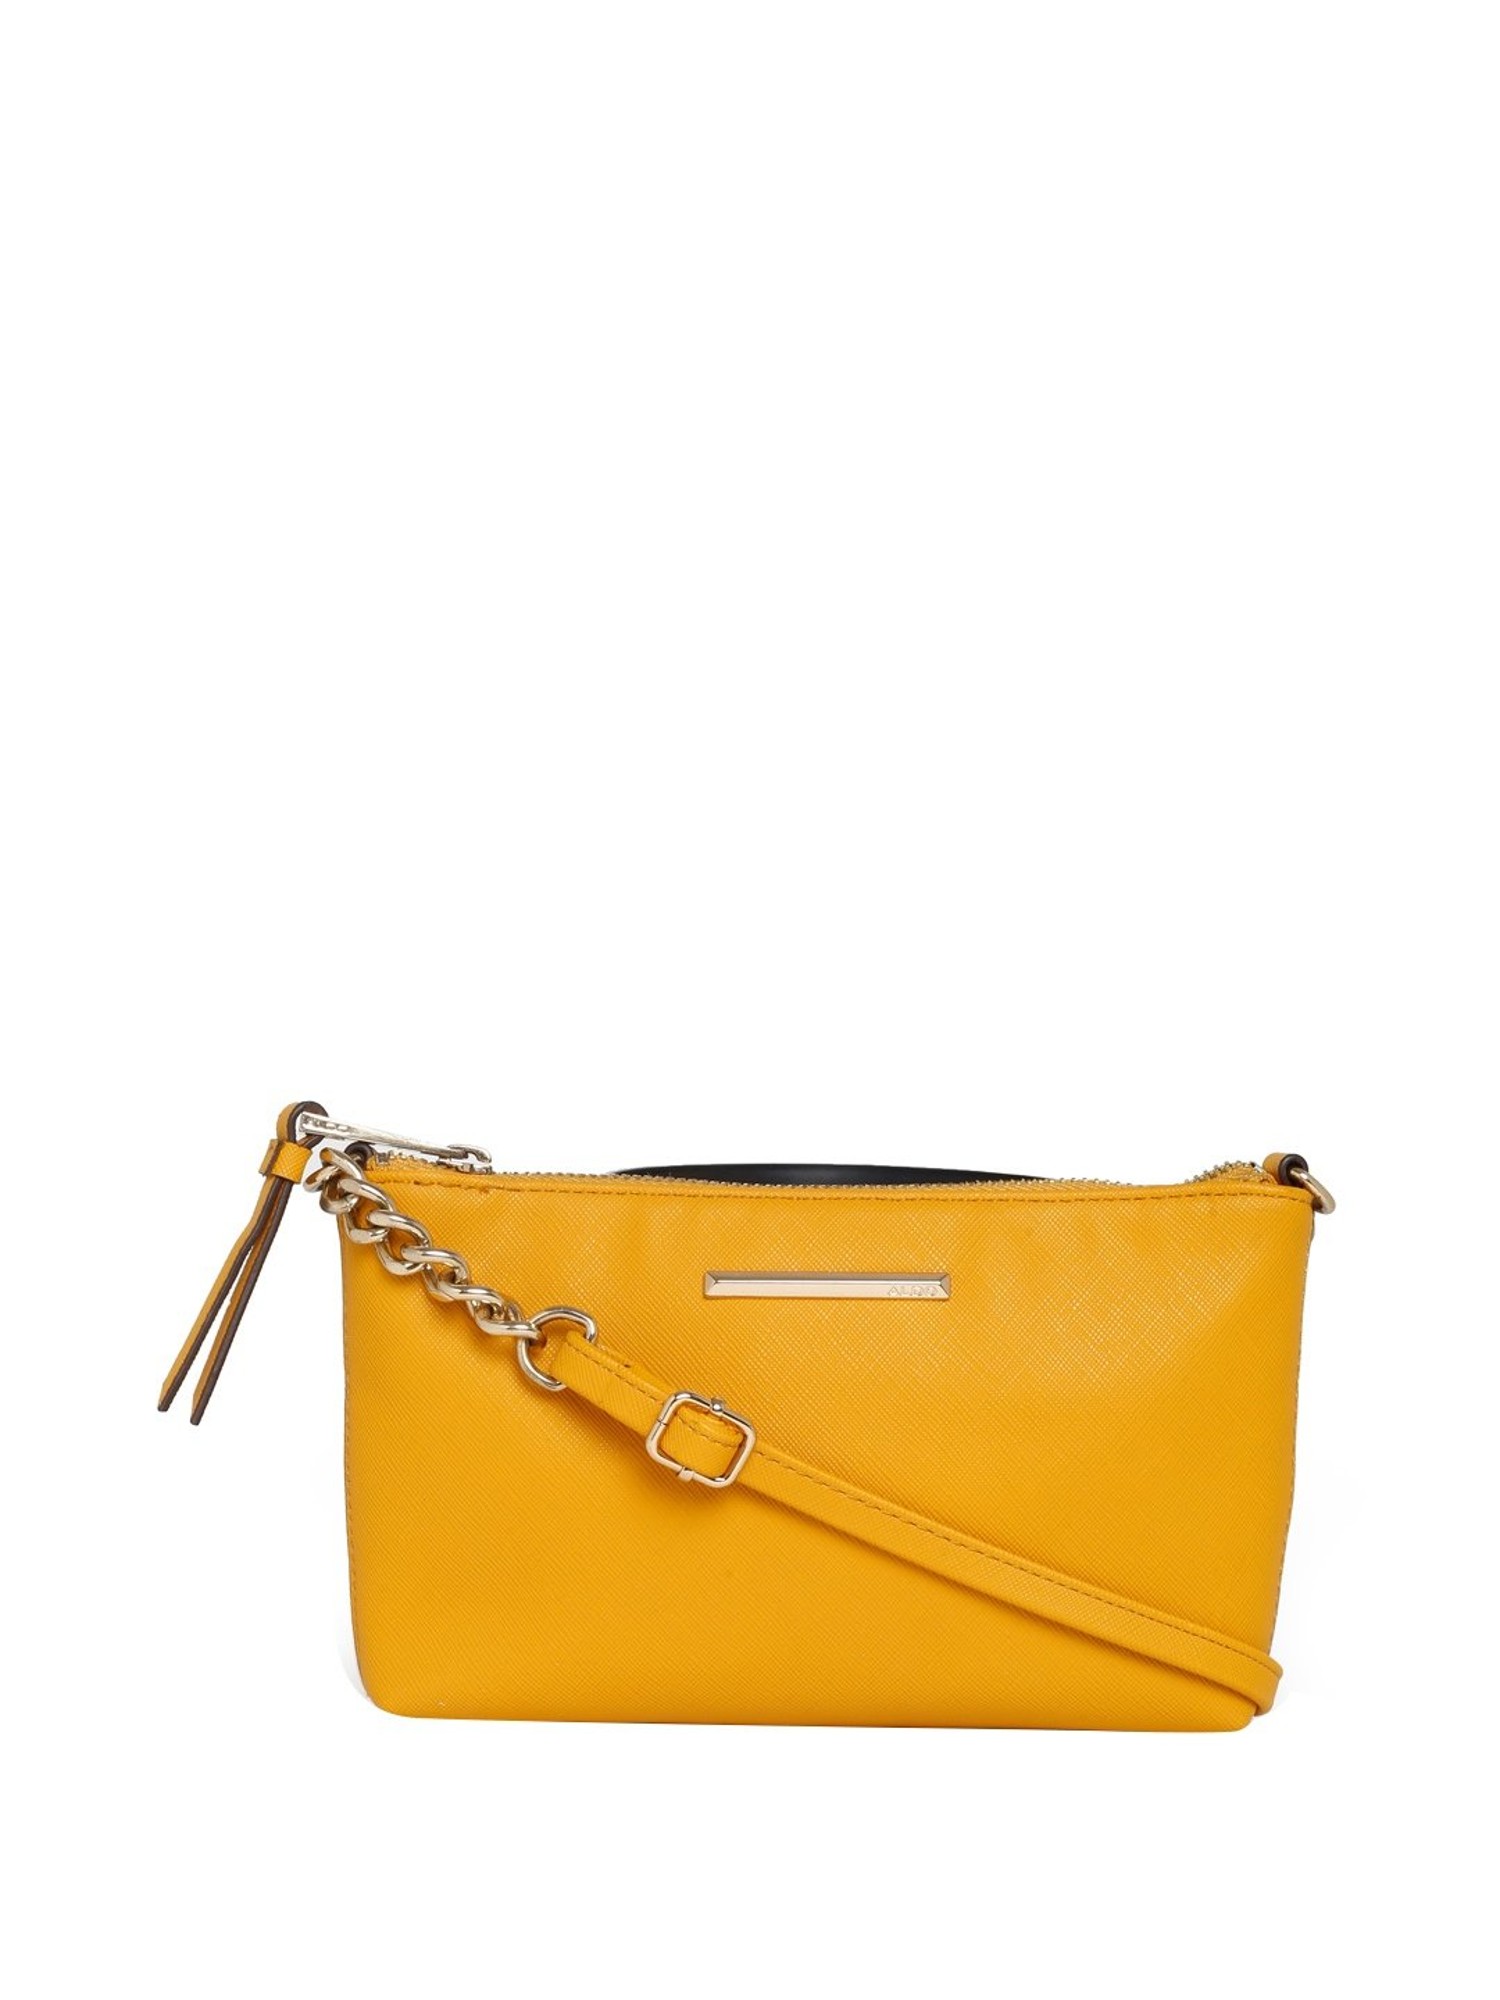 Details 84+ aldo yellow sling bag latest - stylex.vn